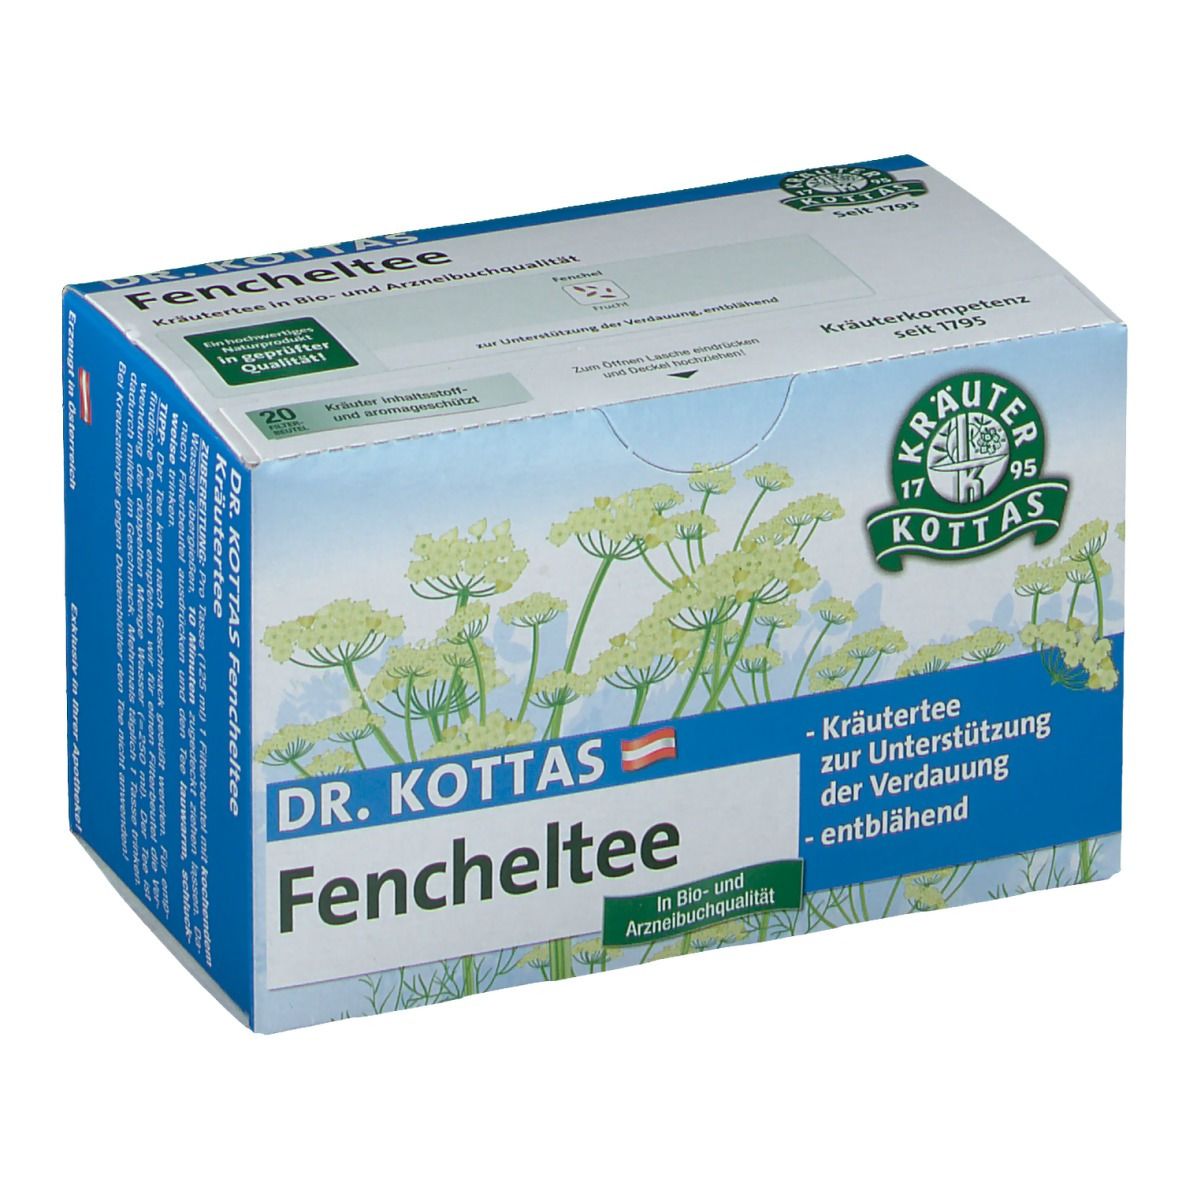 DR. KOTTAS Fencheltee